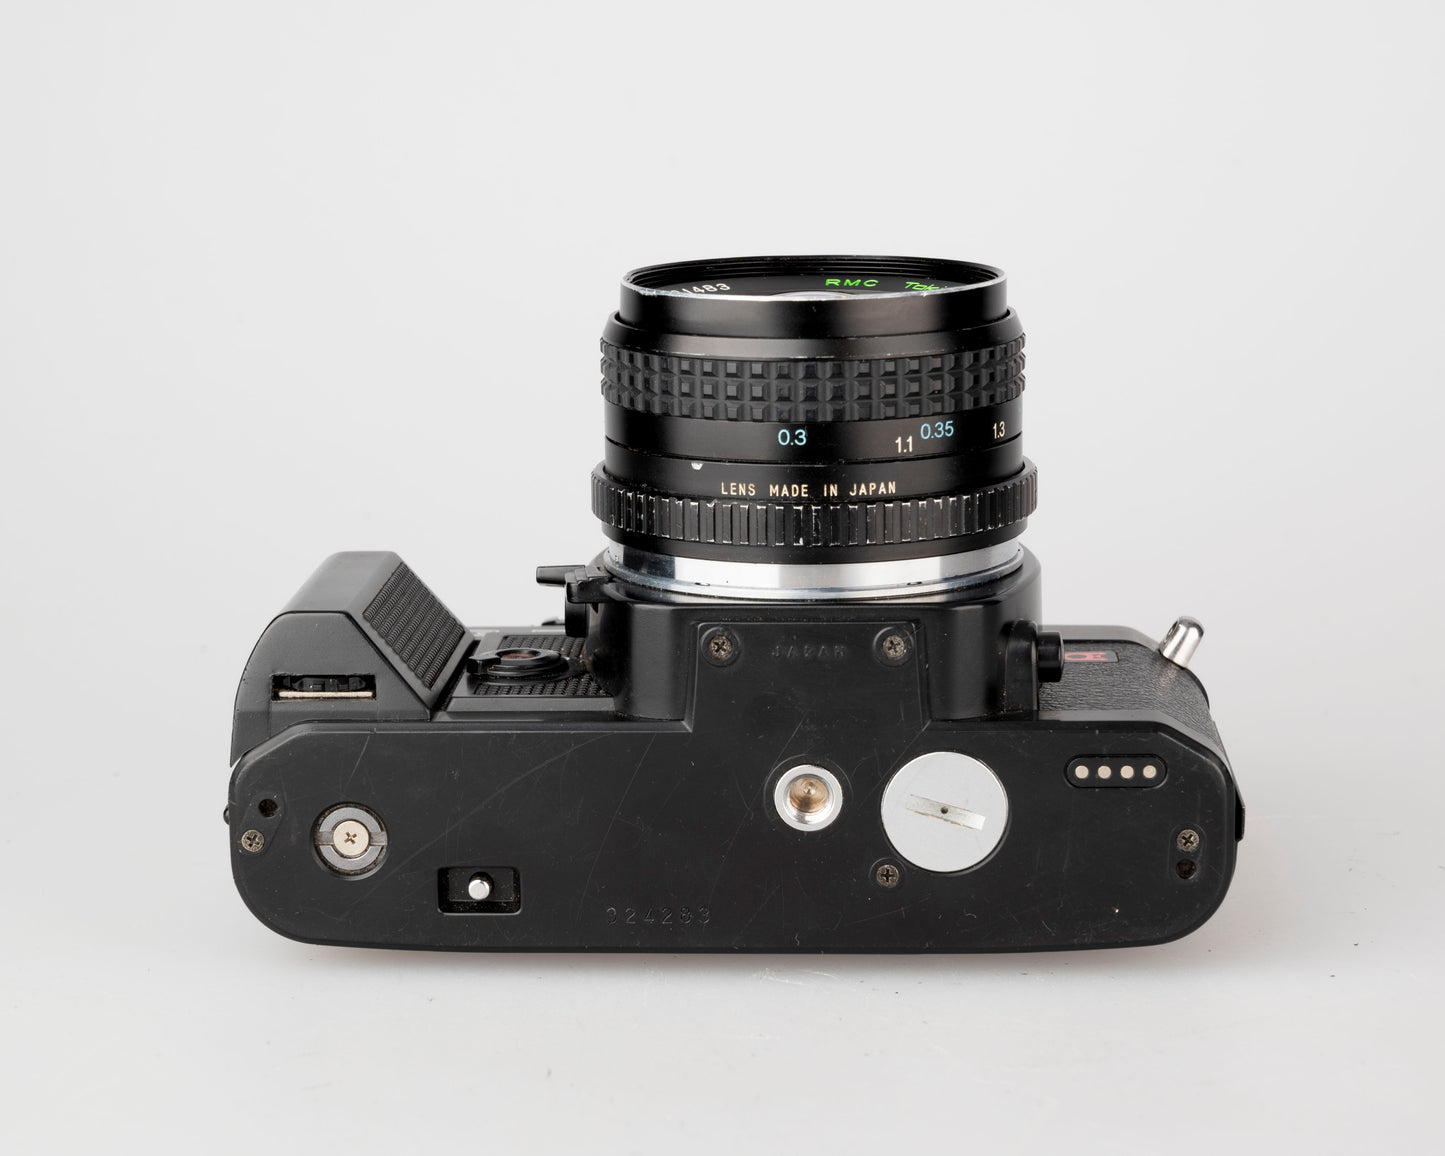 Appareil photo reflex à film Chinon CG-5 35 mm avec objectif Tokina 28 mm (série 324283)